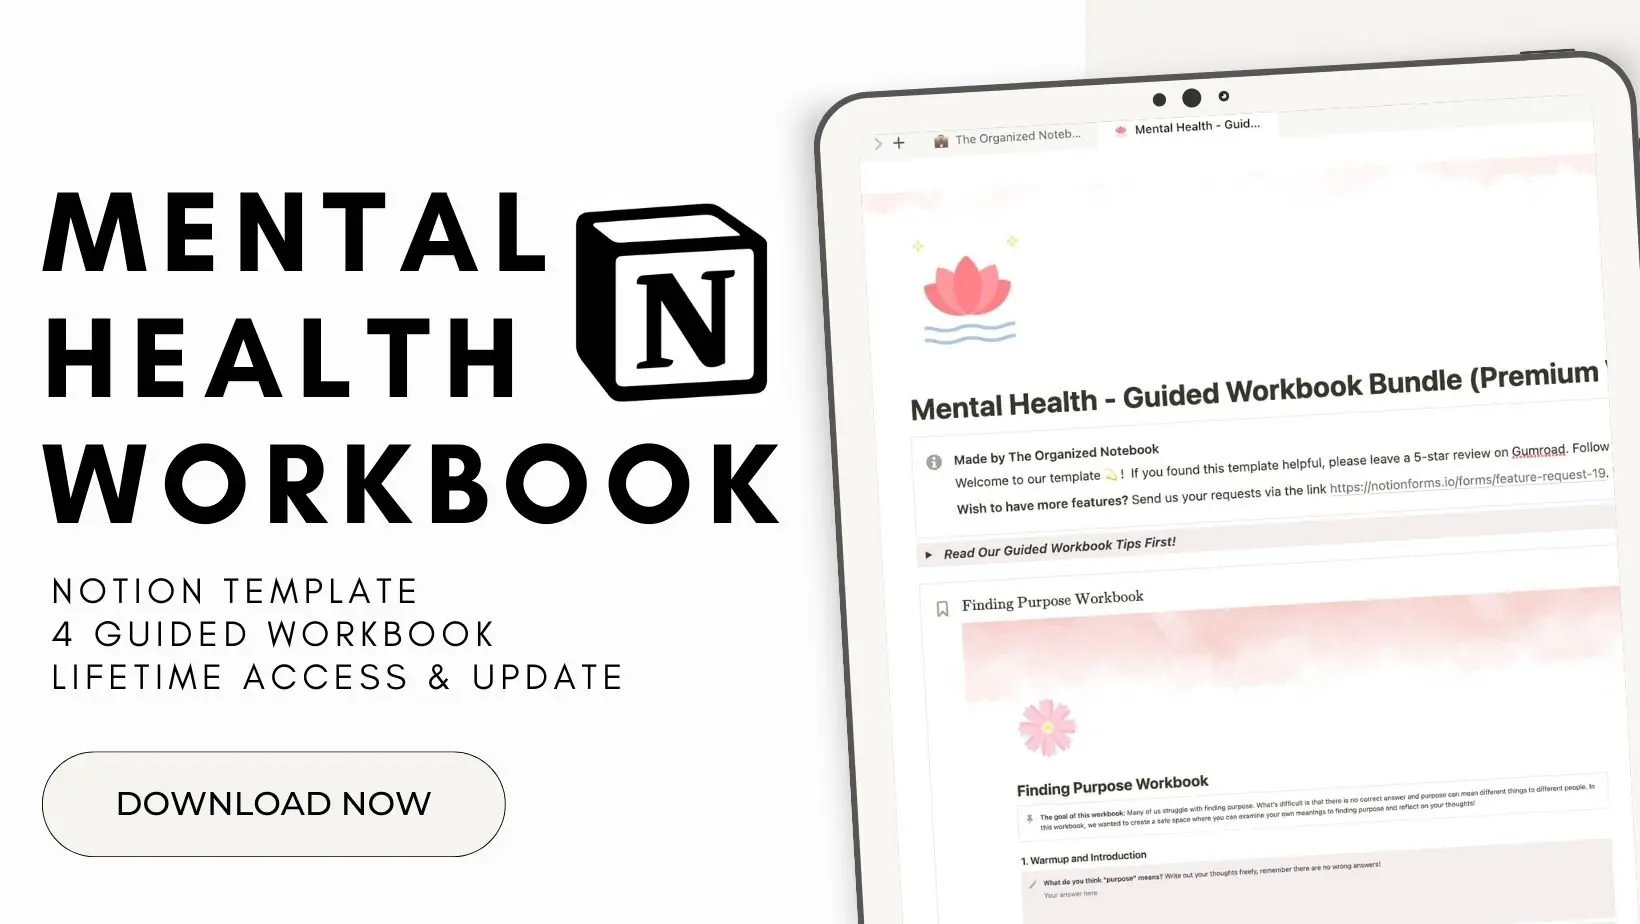 Notion Mental Health - Guided Workbook Bundle image